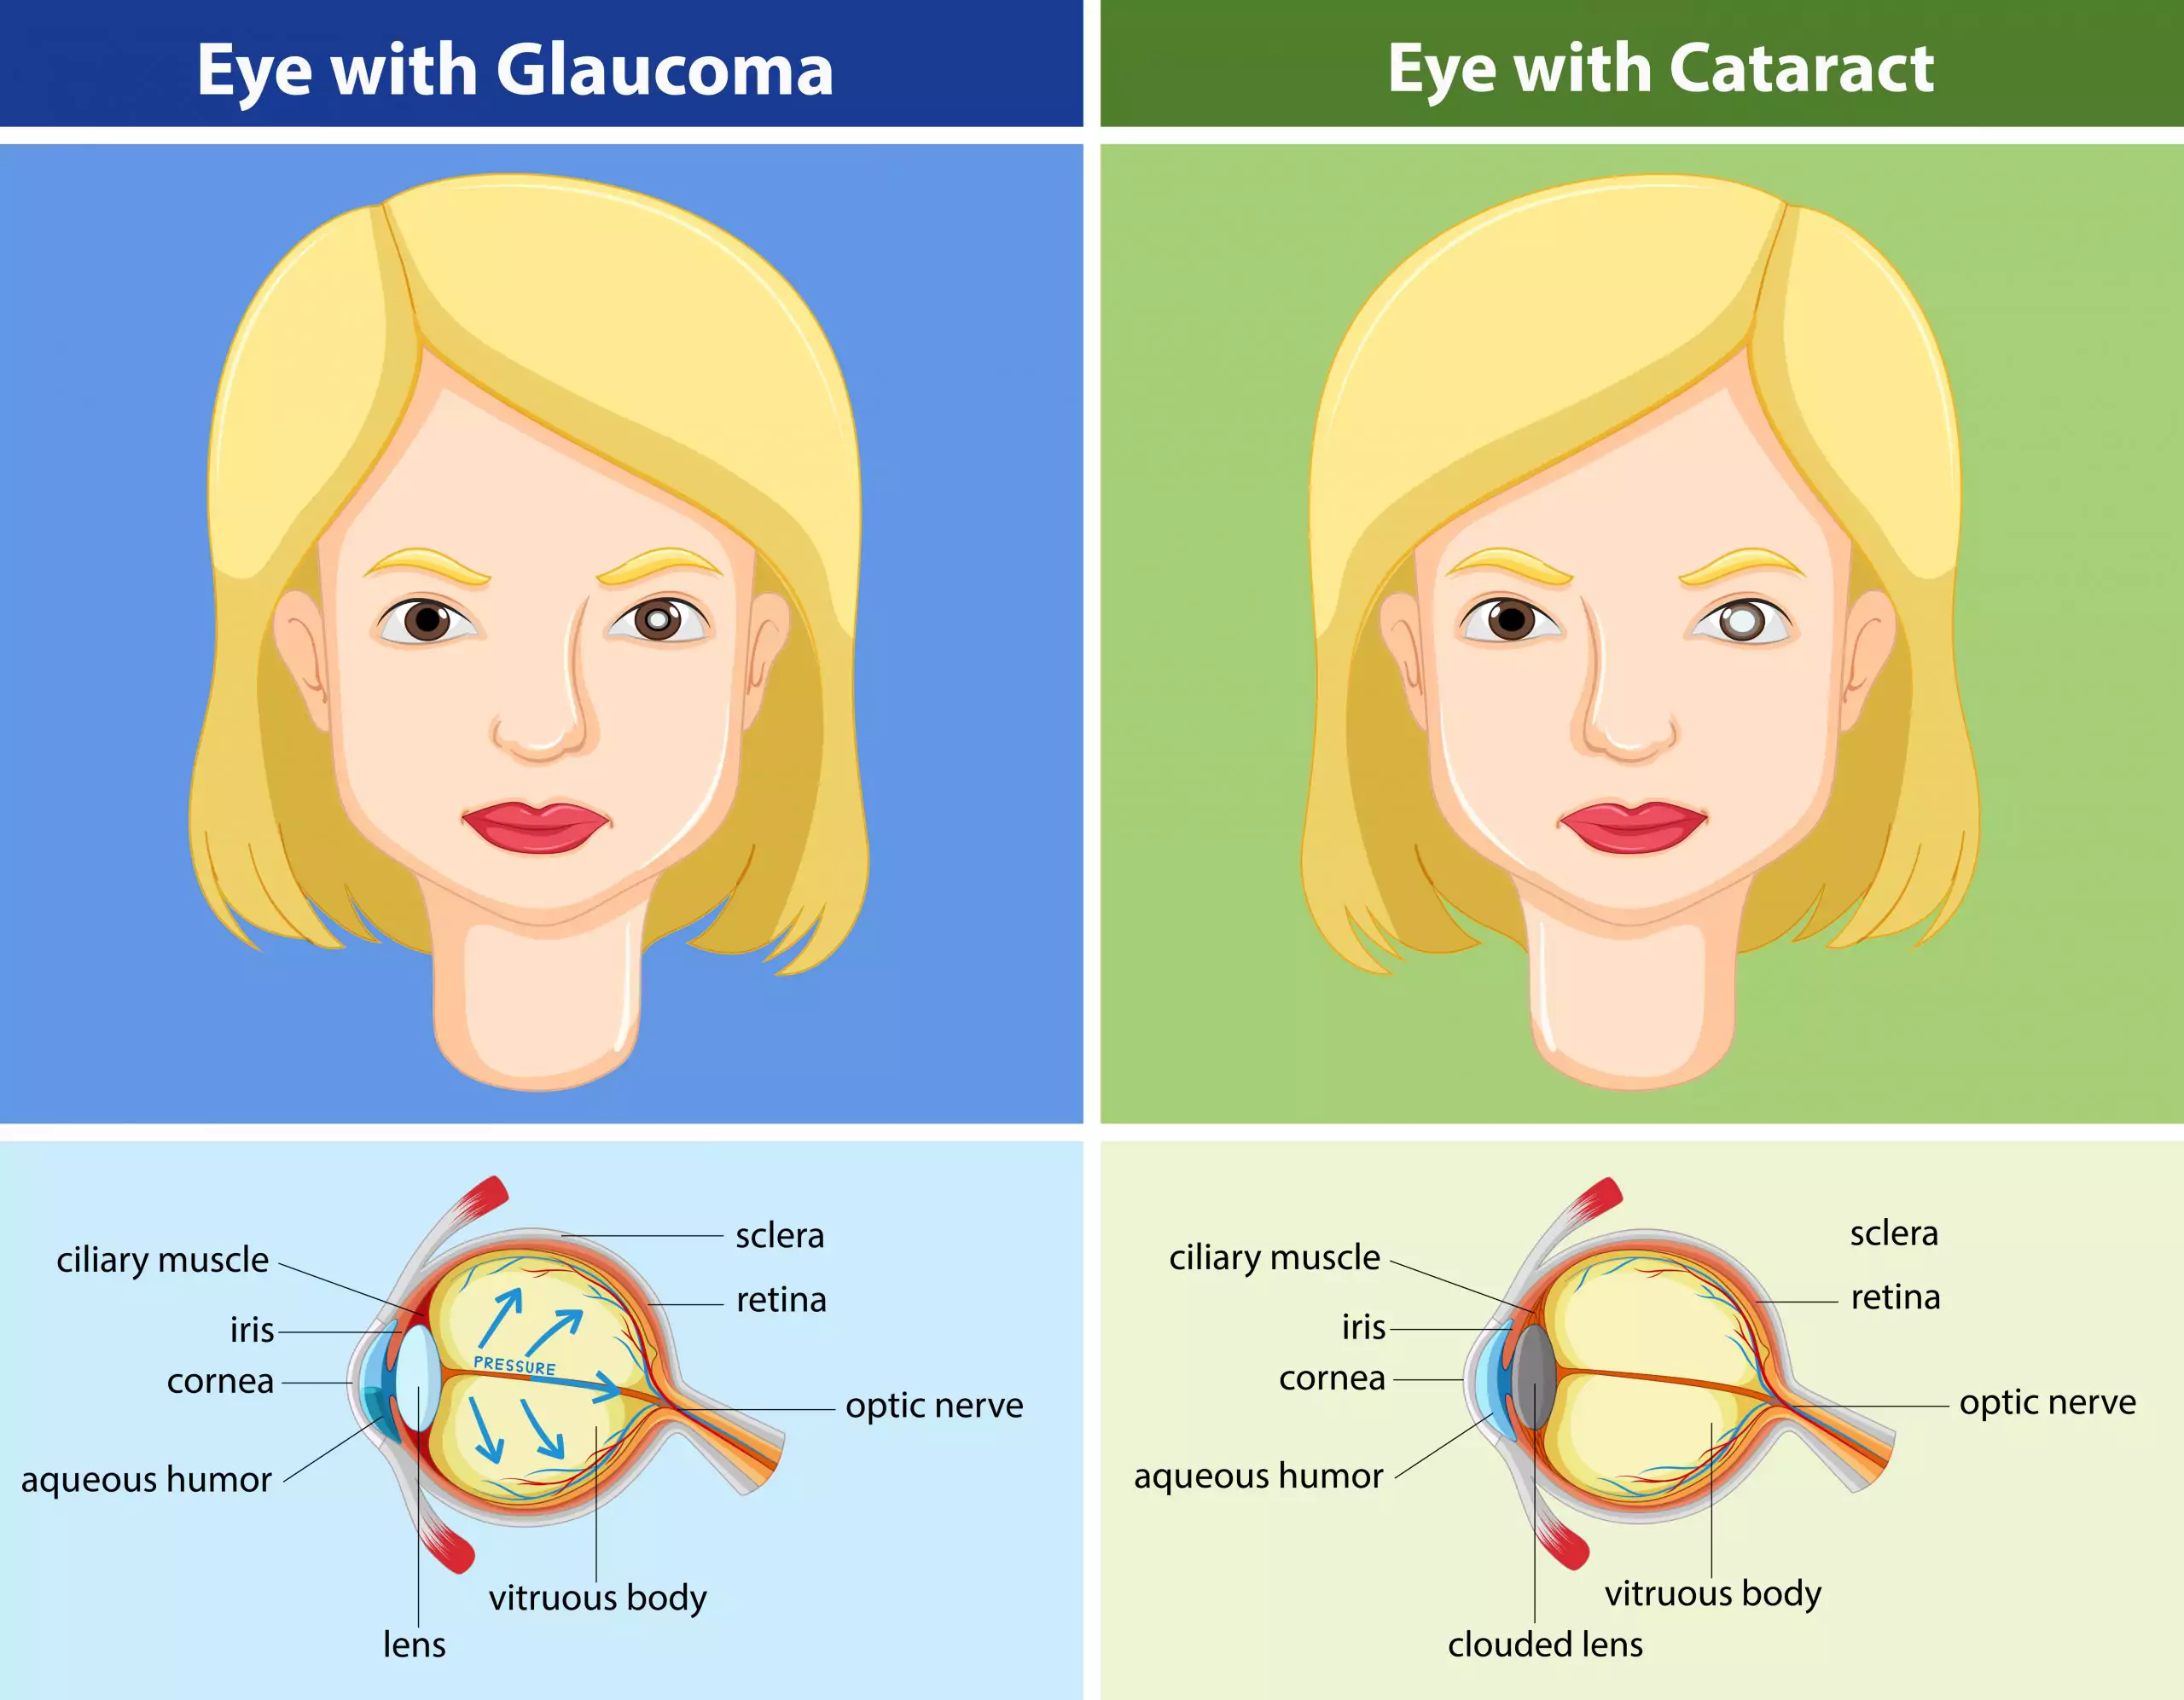 Comparison of glaucoma and cataracts